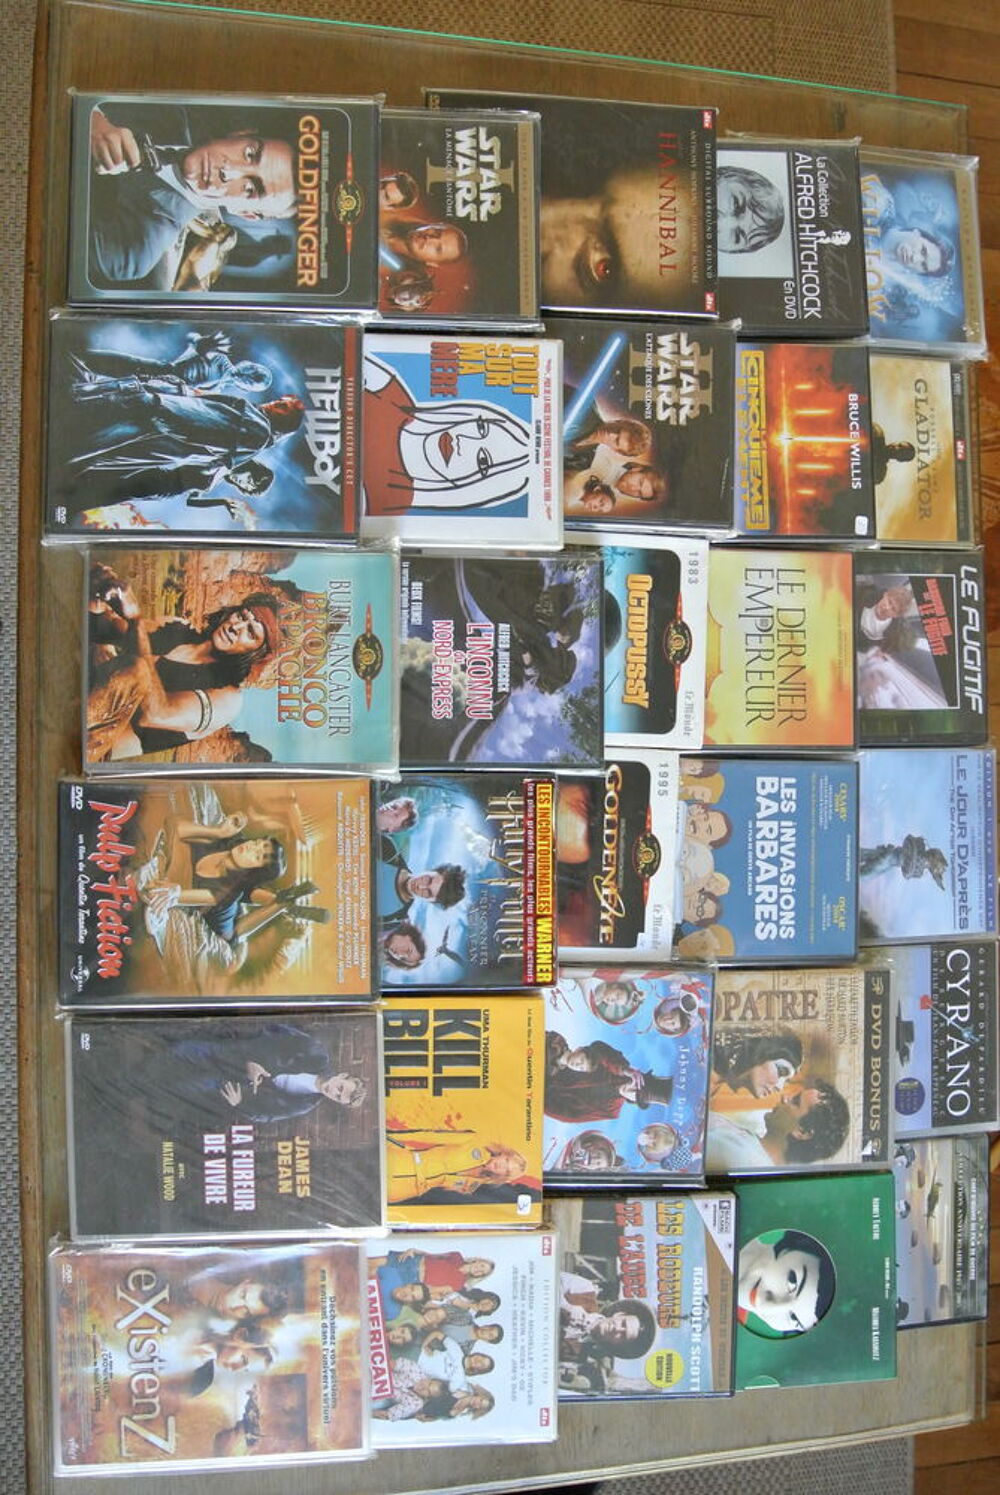 Collection de DVD : Western, SF, Guerre, Aventure ...
DVD et blu-ray